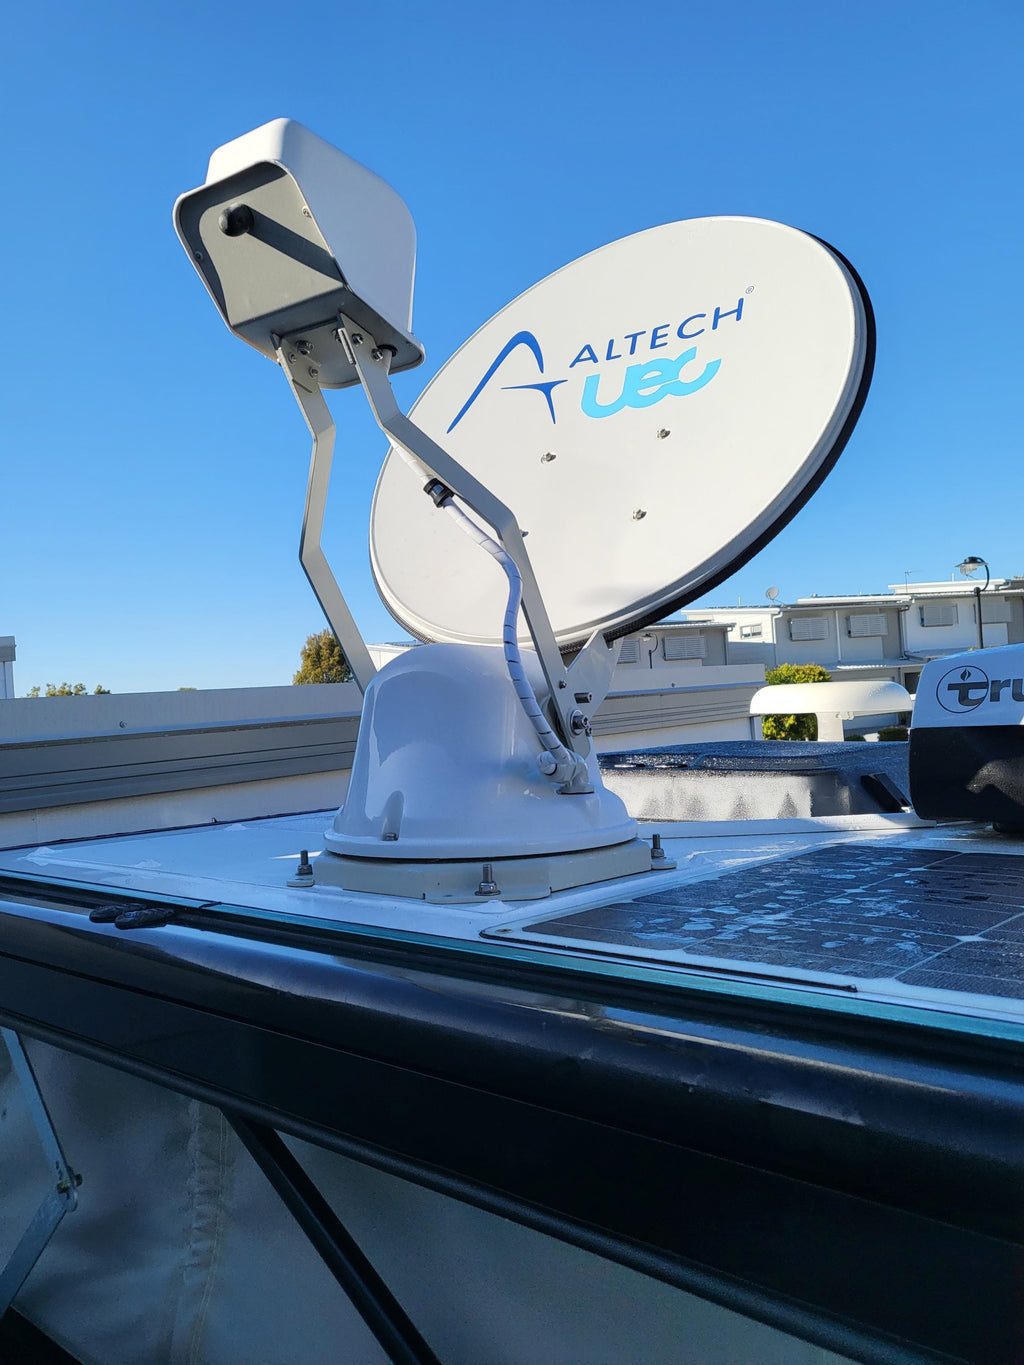 Altech UEC Aura (Halo) 60cm Auto Roof Caravan Satellite Dish